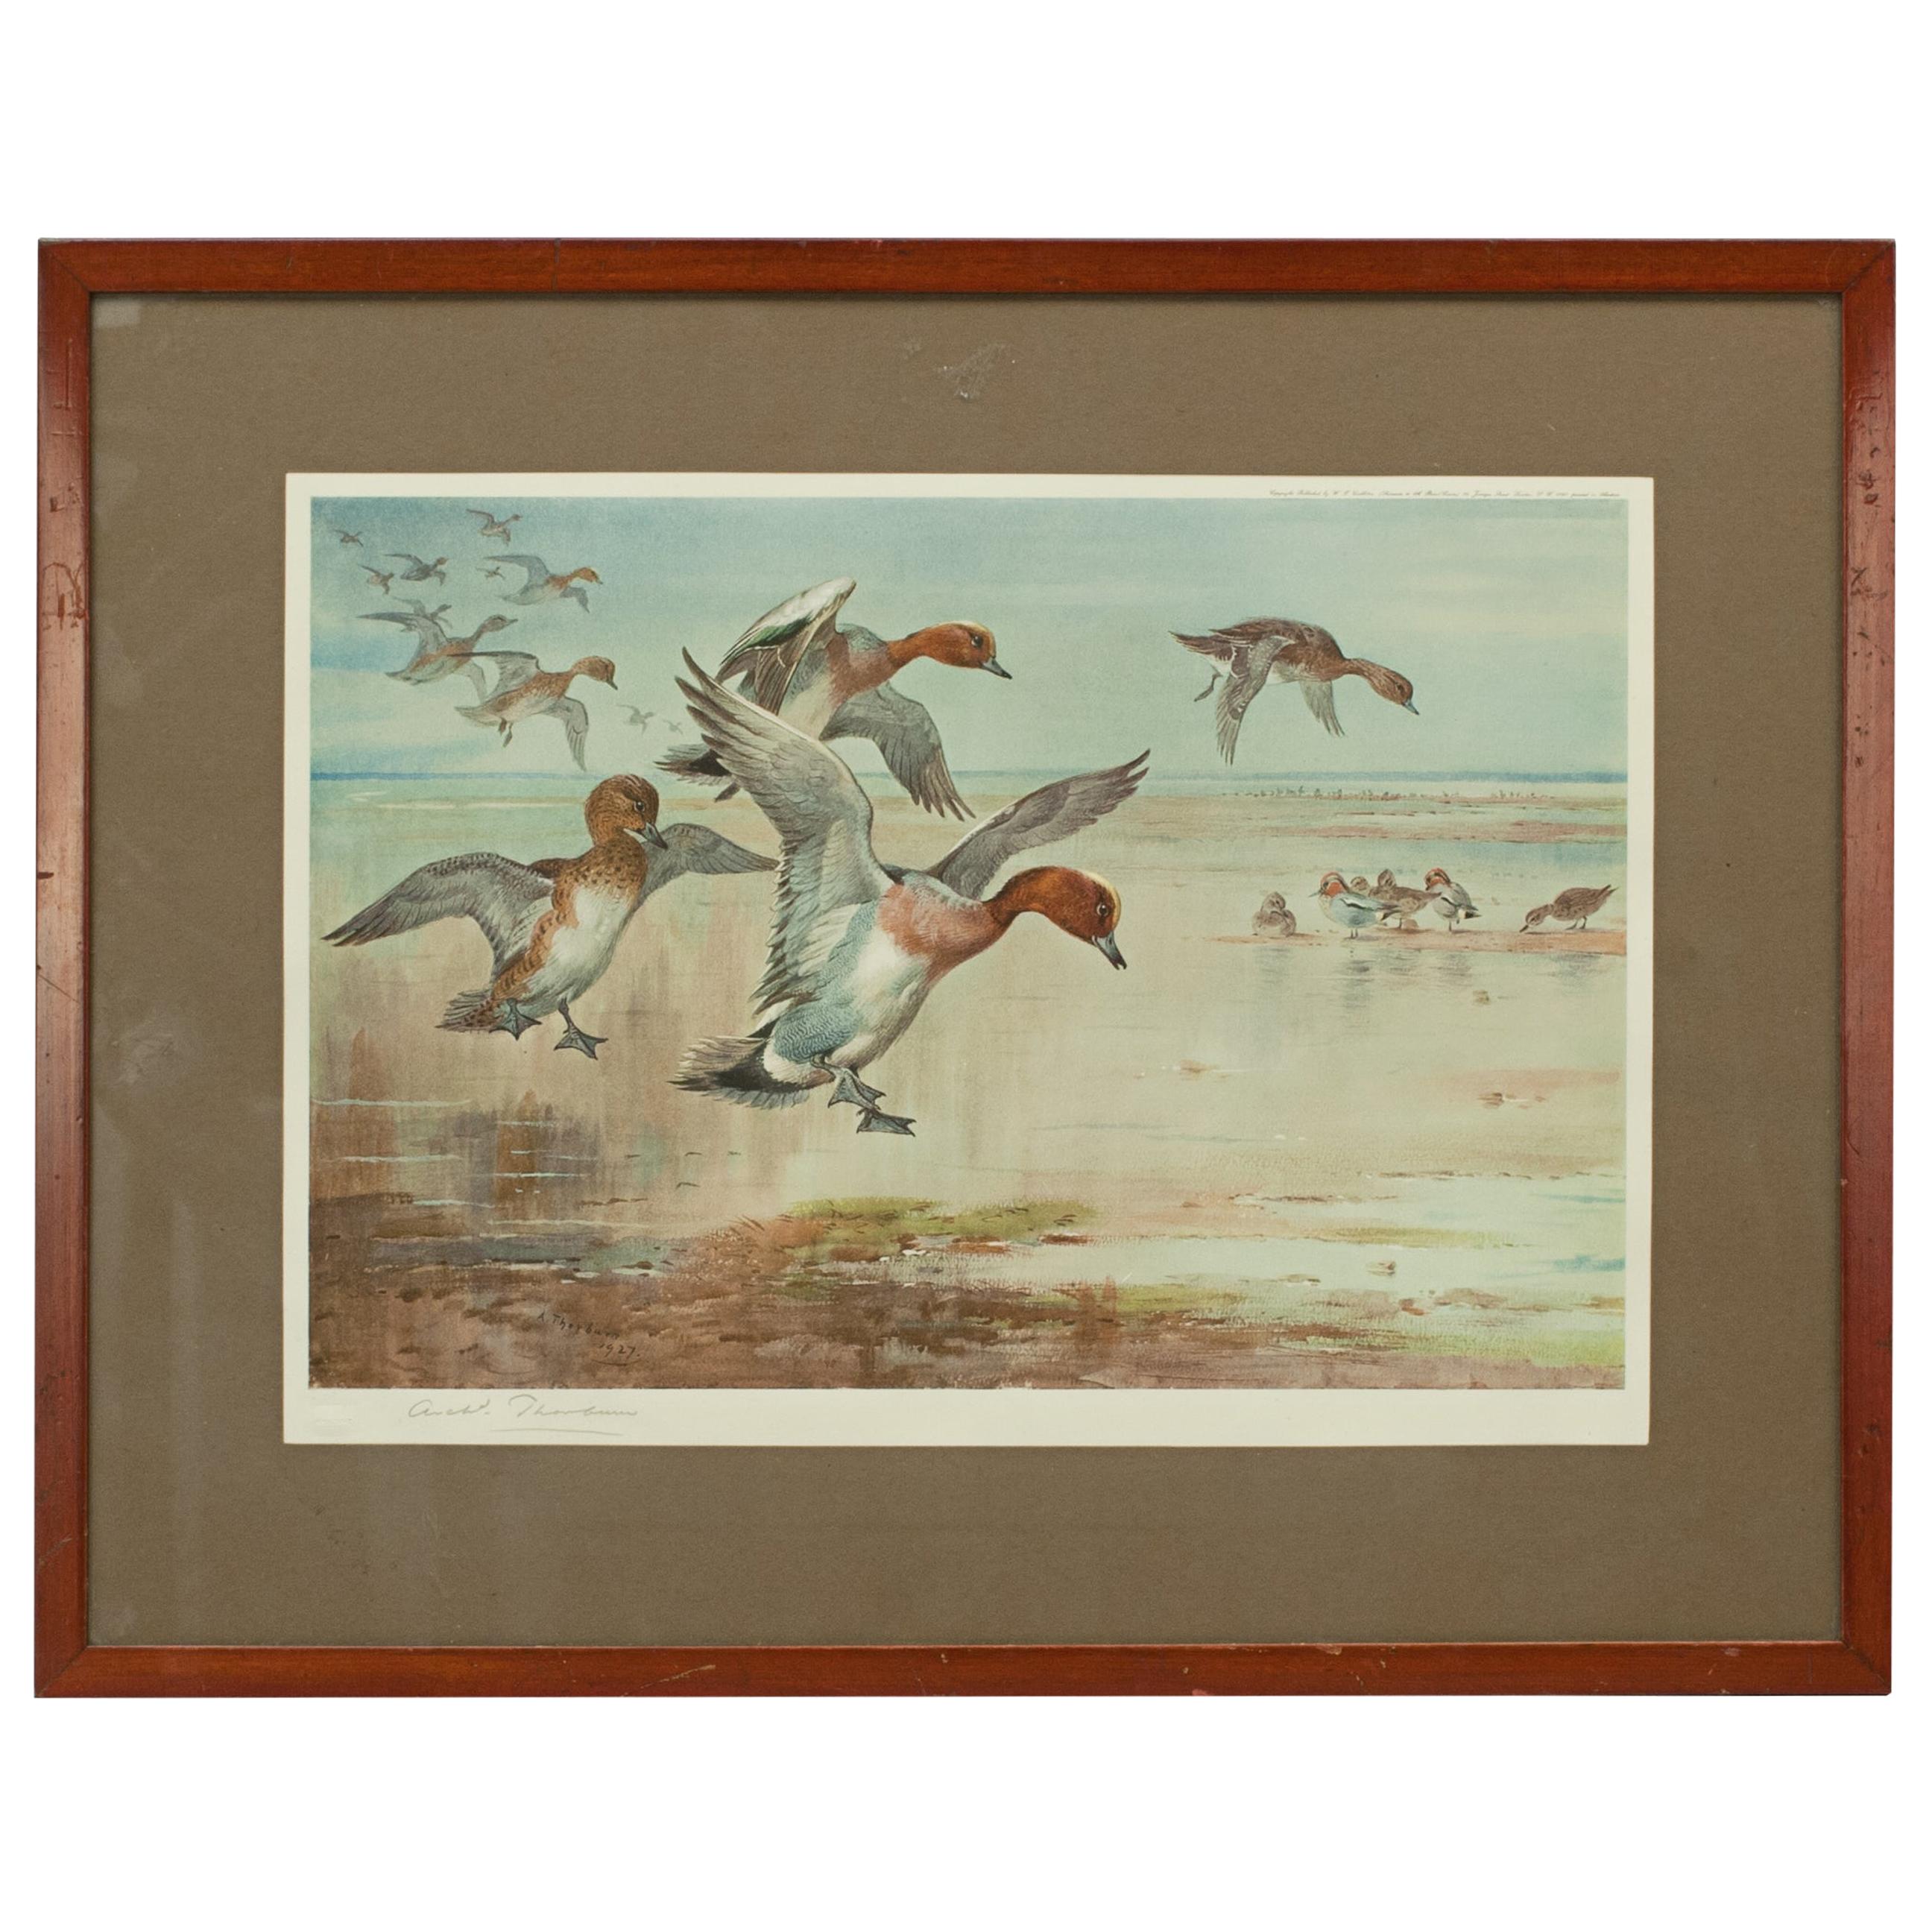 Vintage Archibald Thorburn Print, Widgeon Alighting, Hunting Print